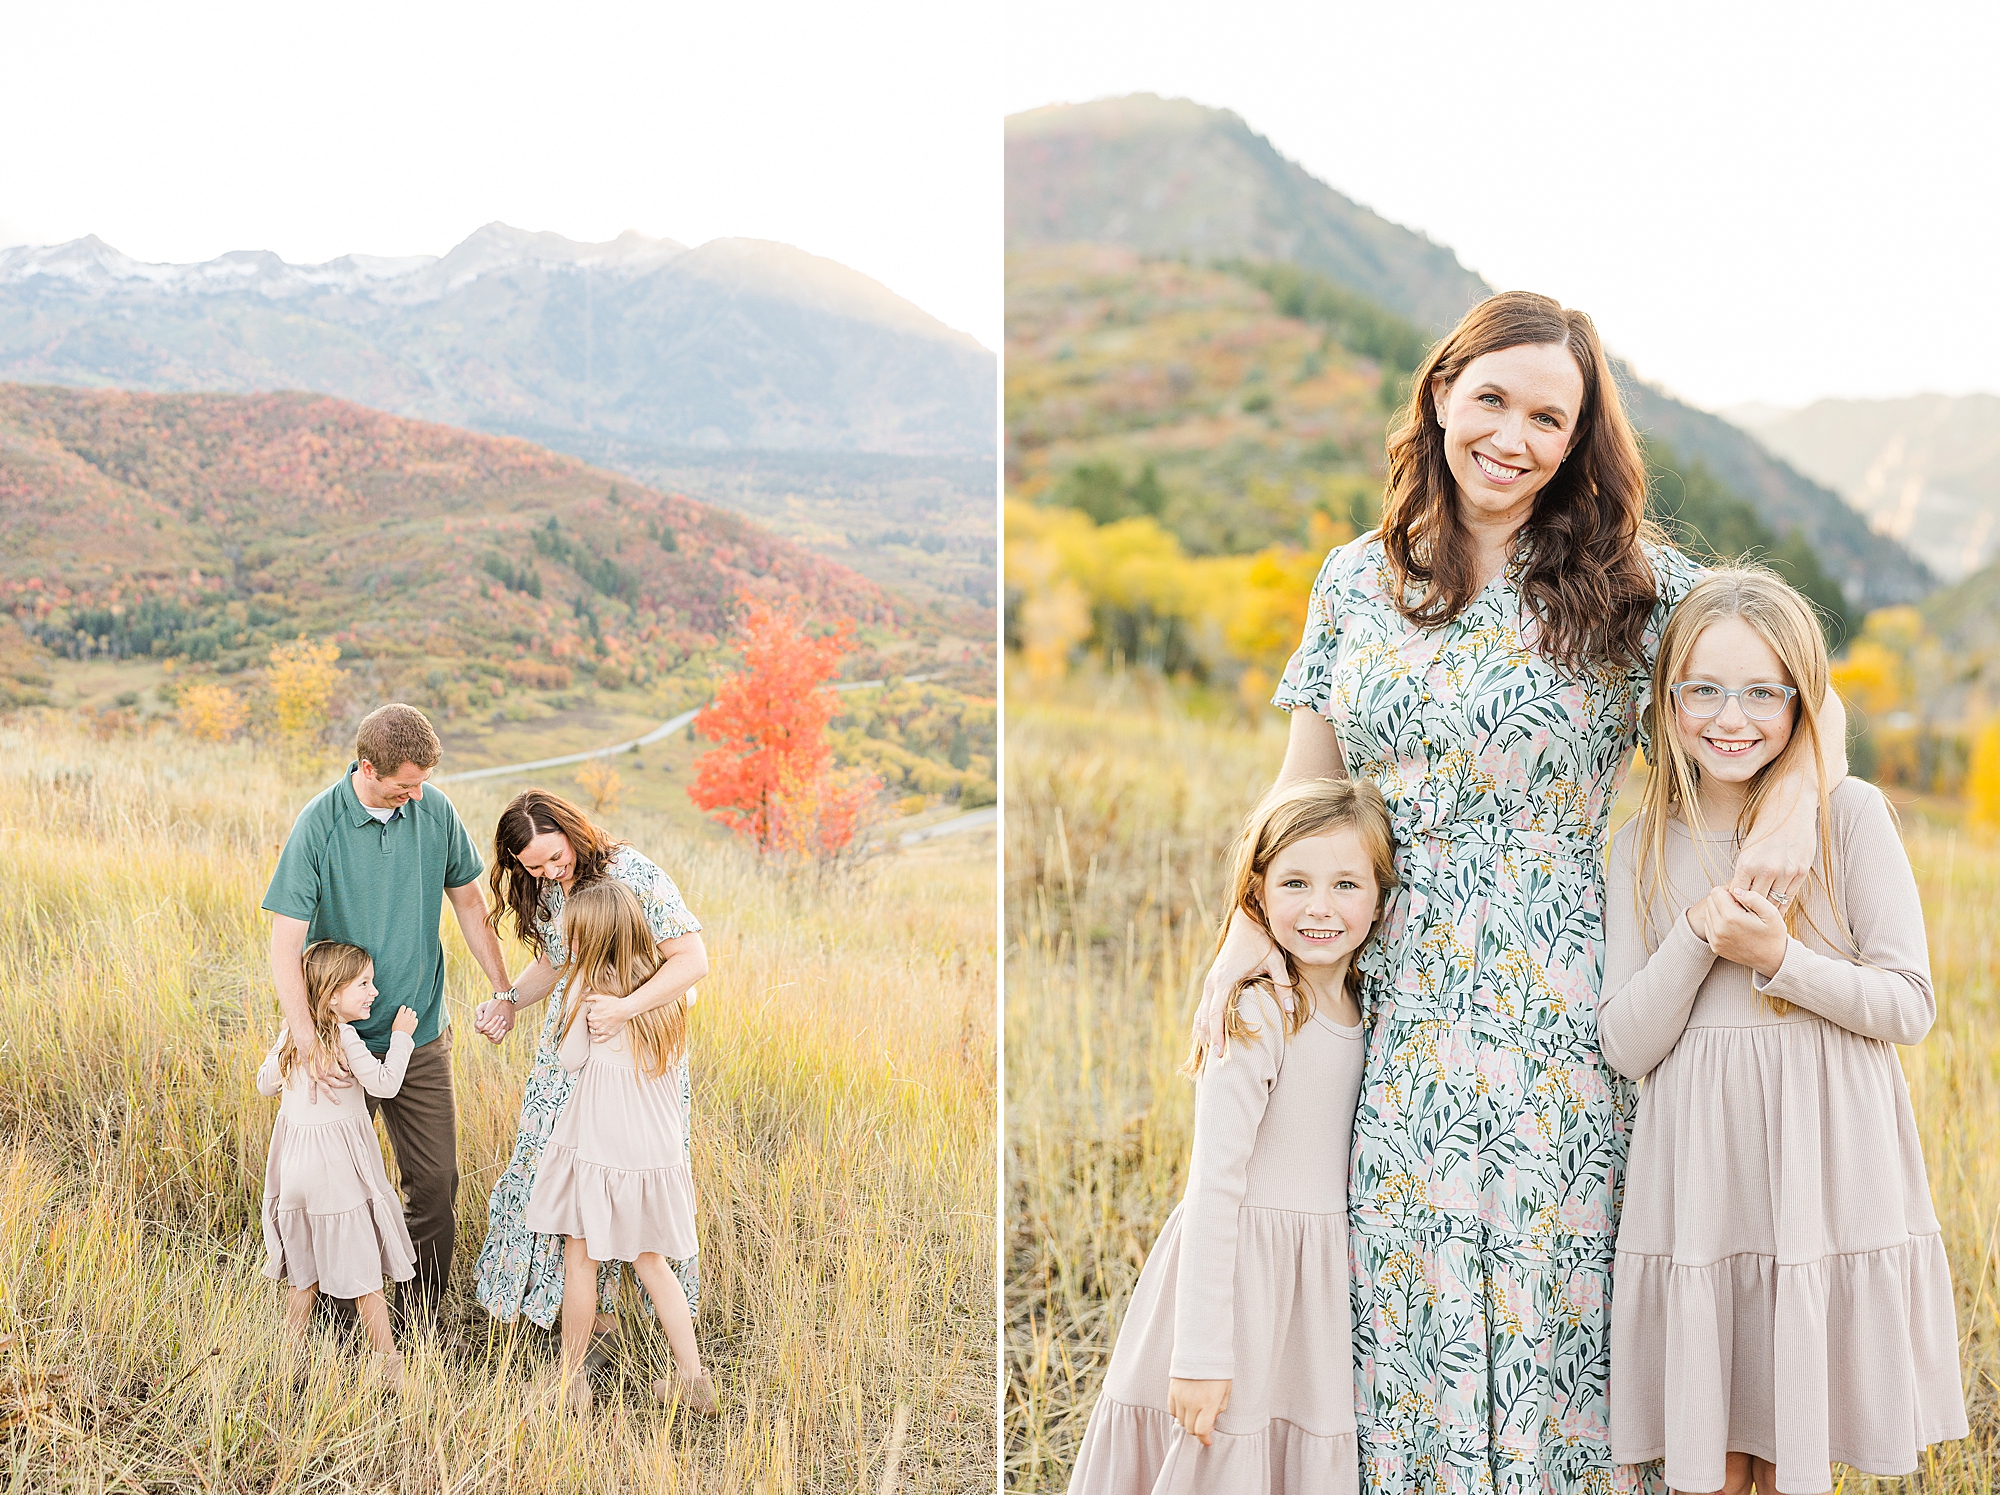 Family love captured amidst the autumn hues of Snow Basin.
